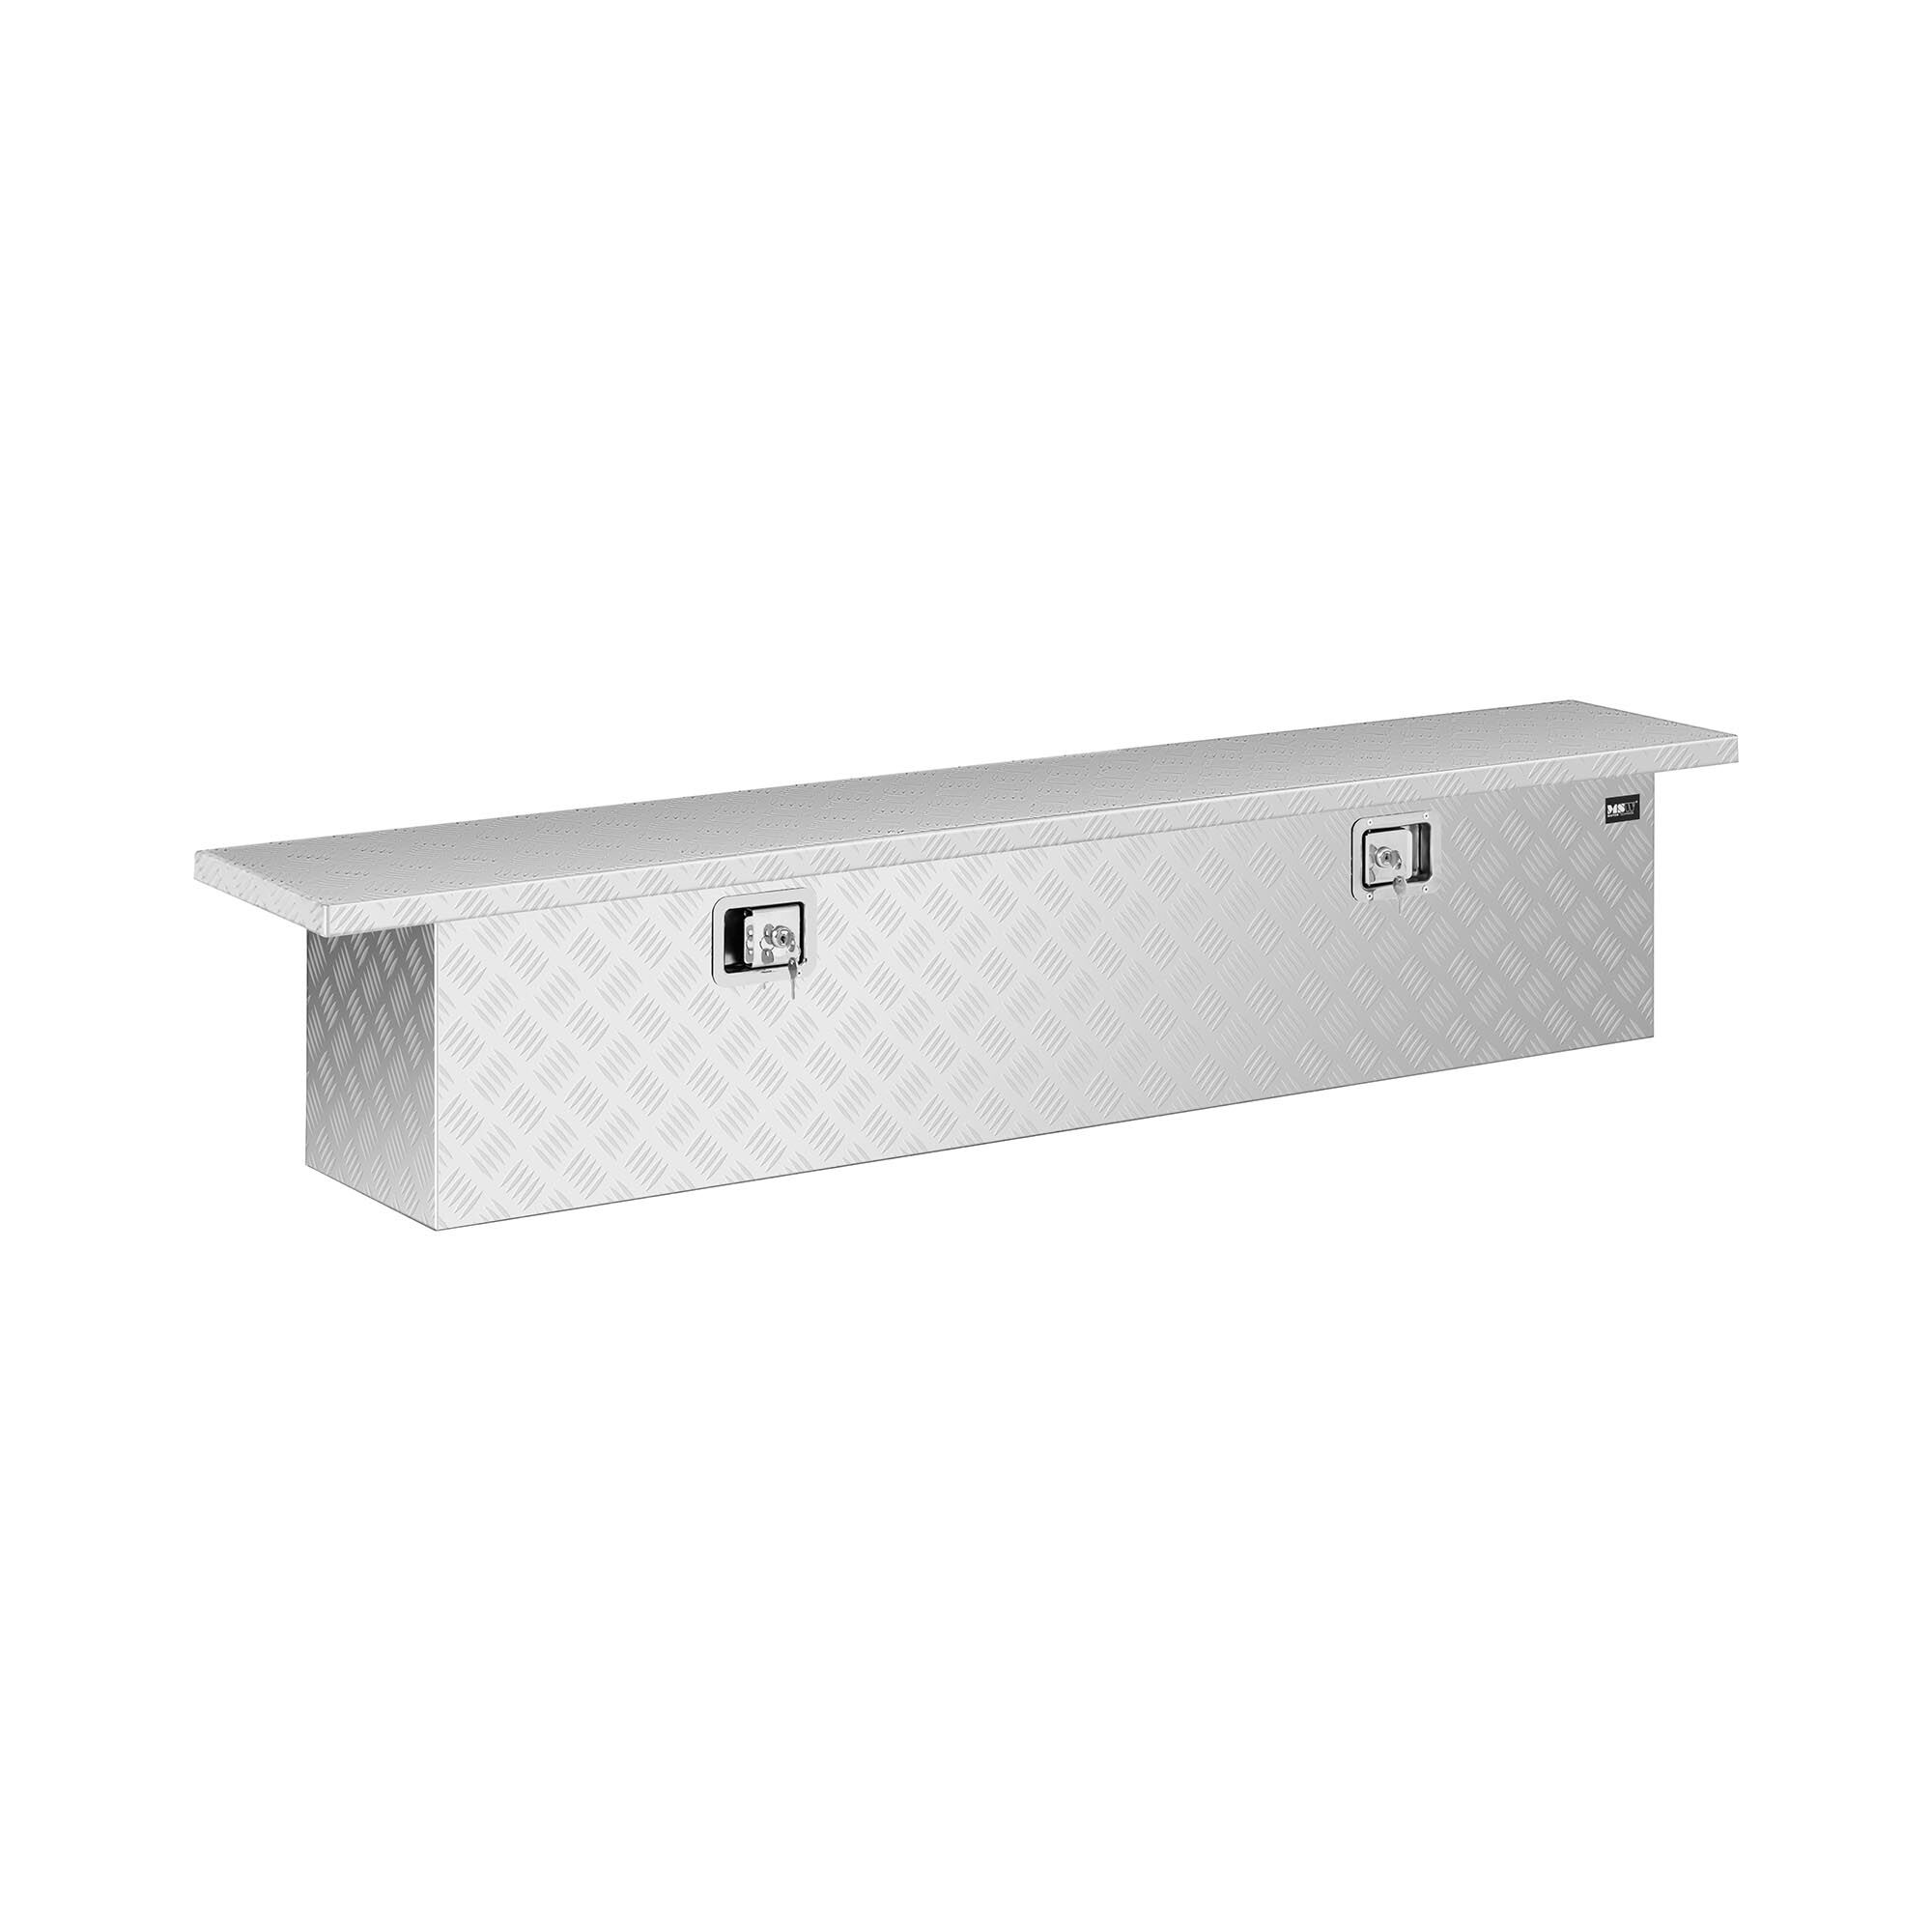 MSW Aluminium Tool Box - checker plate - 175 x 30 x 35 cm - 180 L - lockable